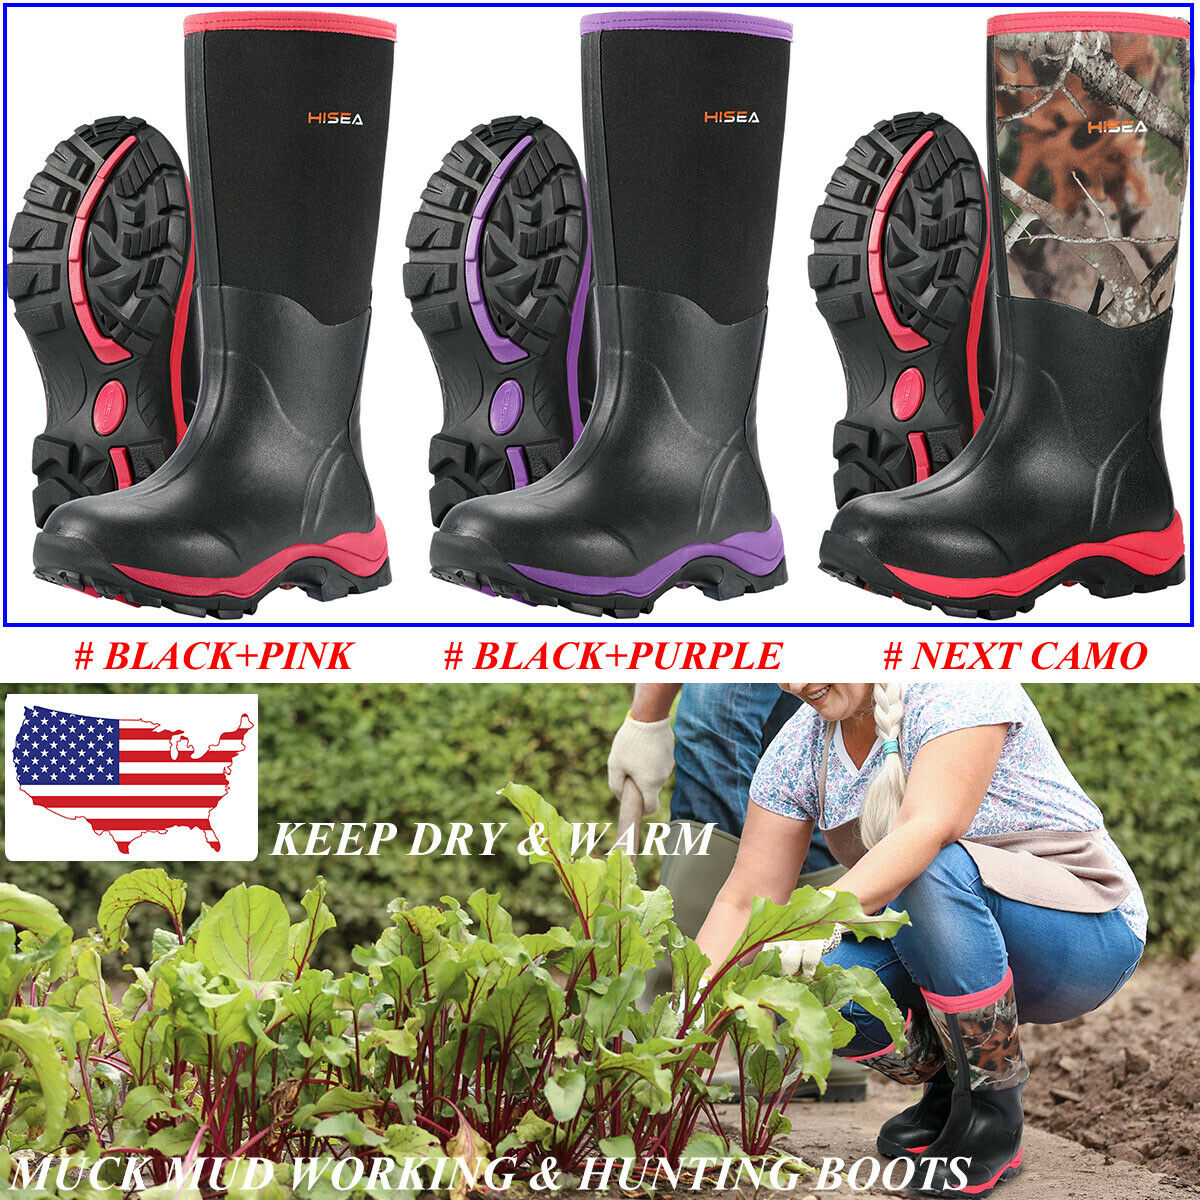 HISEA Women's Waterproof Boots Breathable Neoprene Rubber Muck Mud Hunting Boots